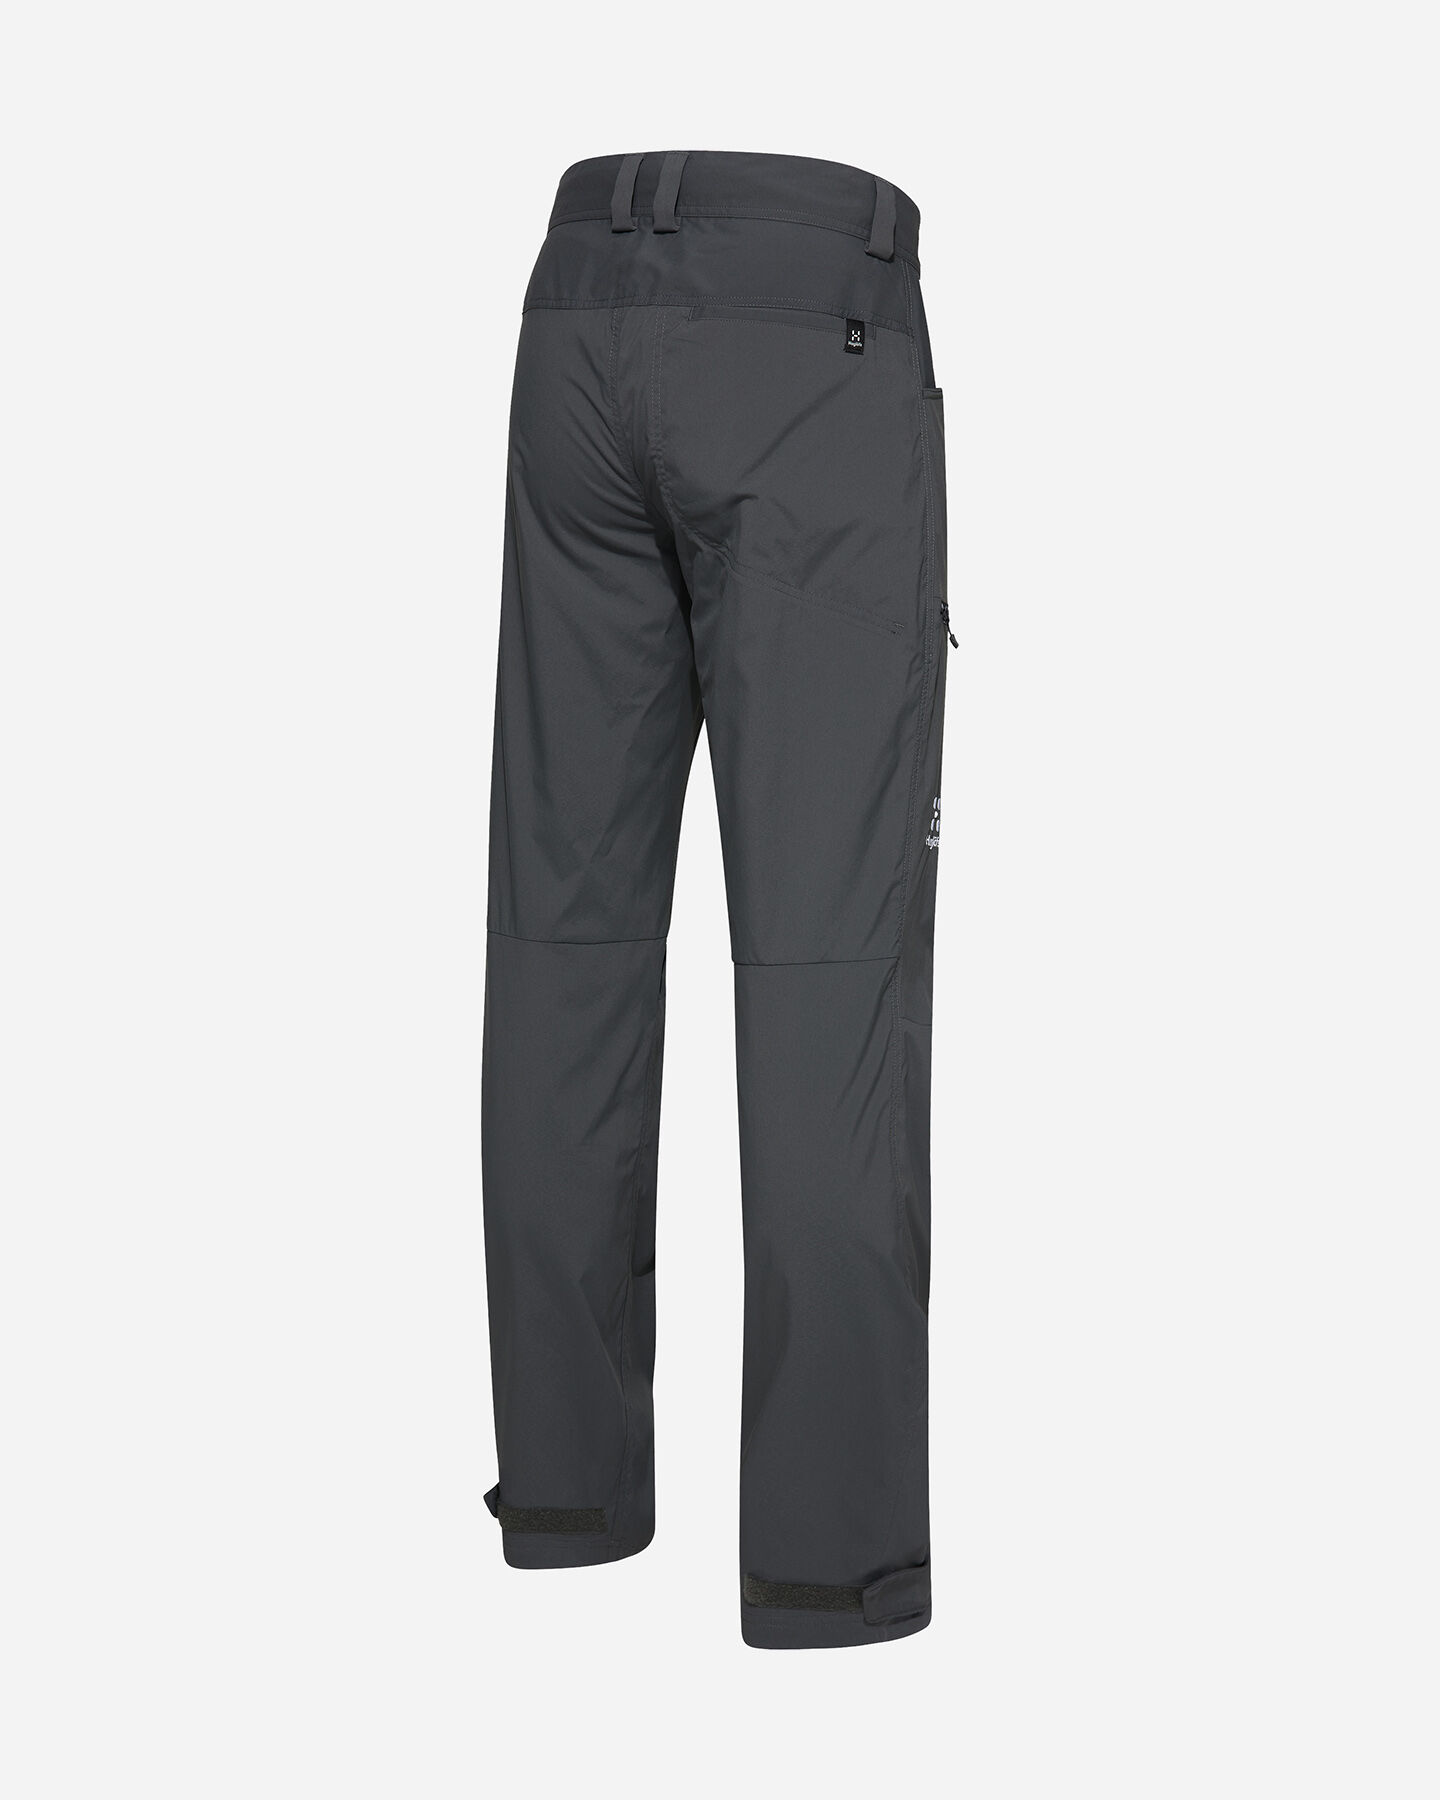  Pantalone outdoor HAGLOFS LITE STANDARD M S4105090|2AT|48 scatto 1